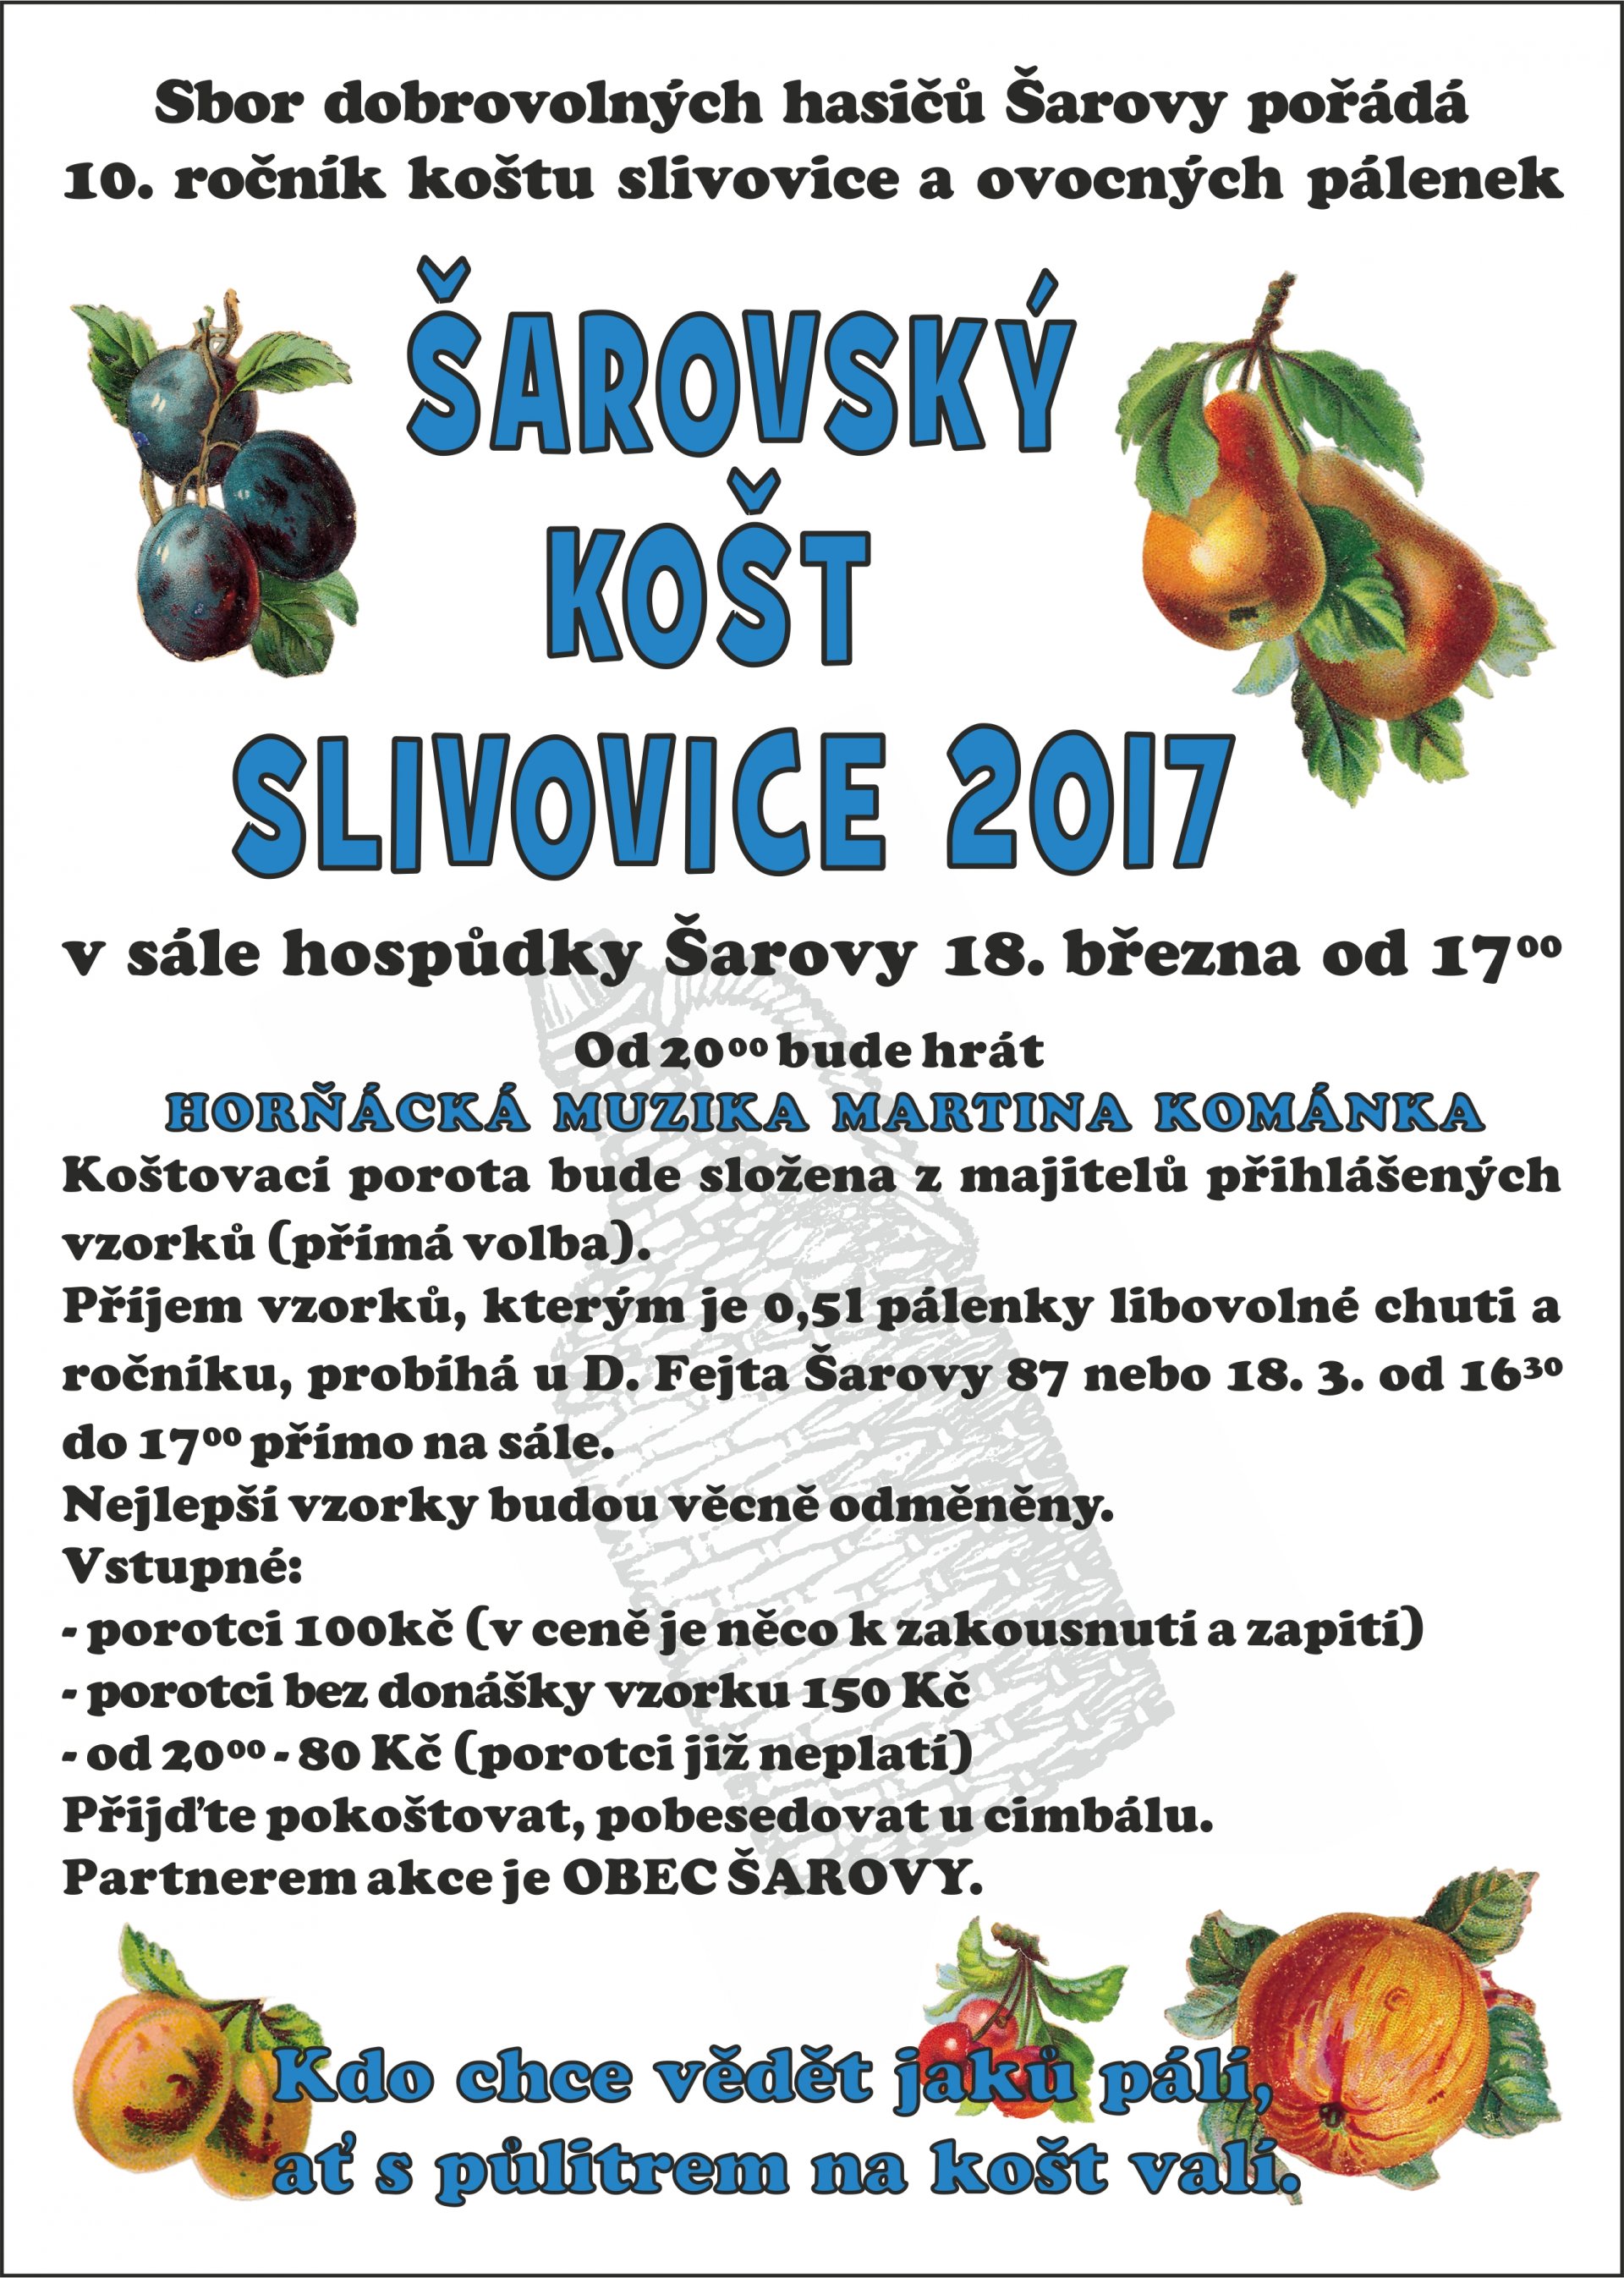 Šarovský košt slivovice 2017